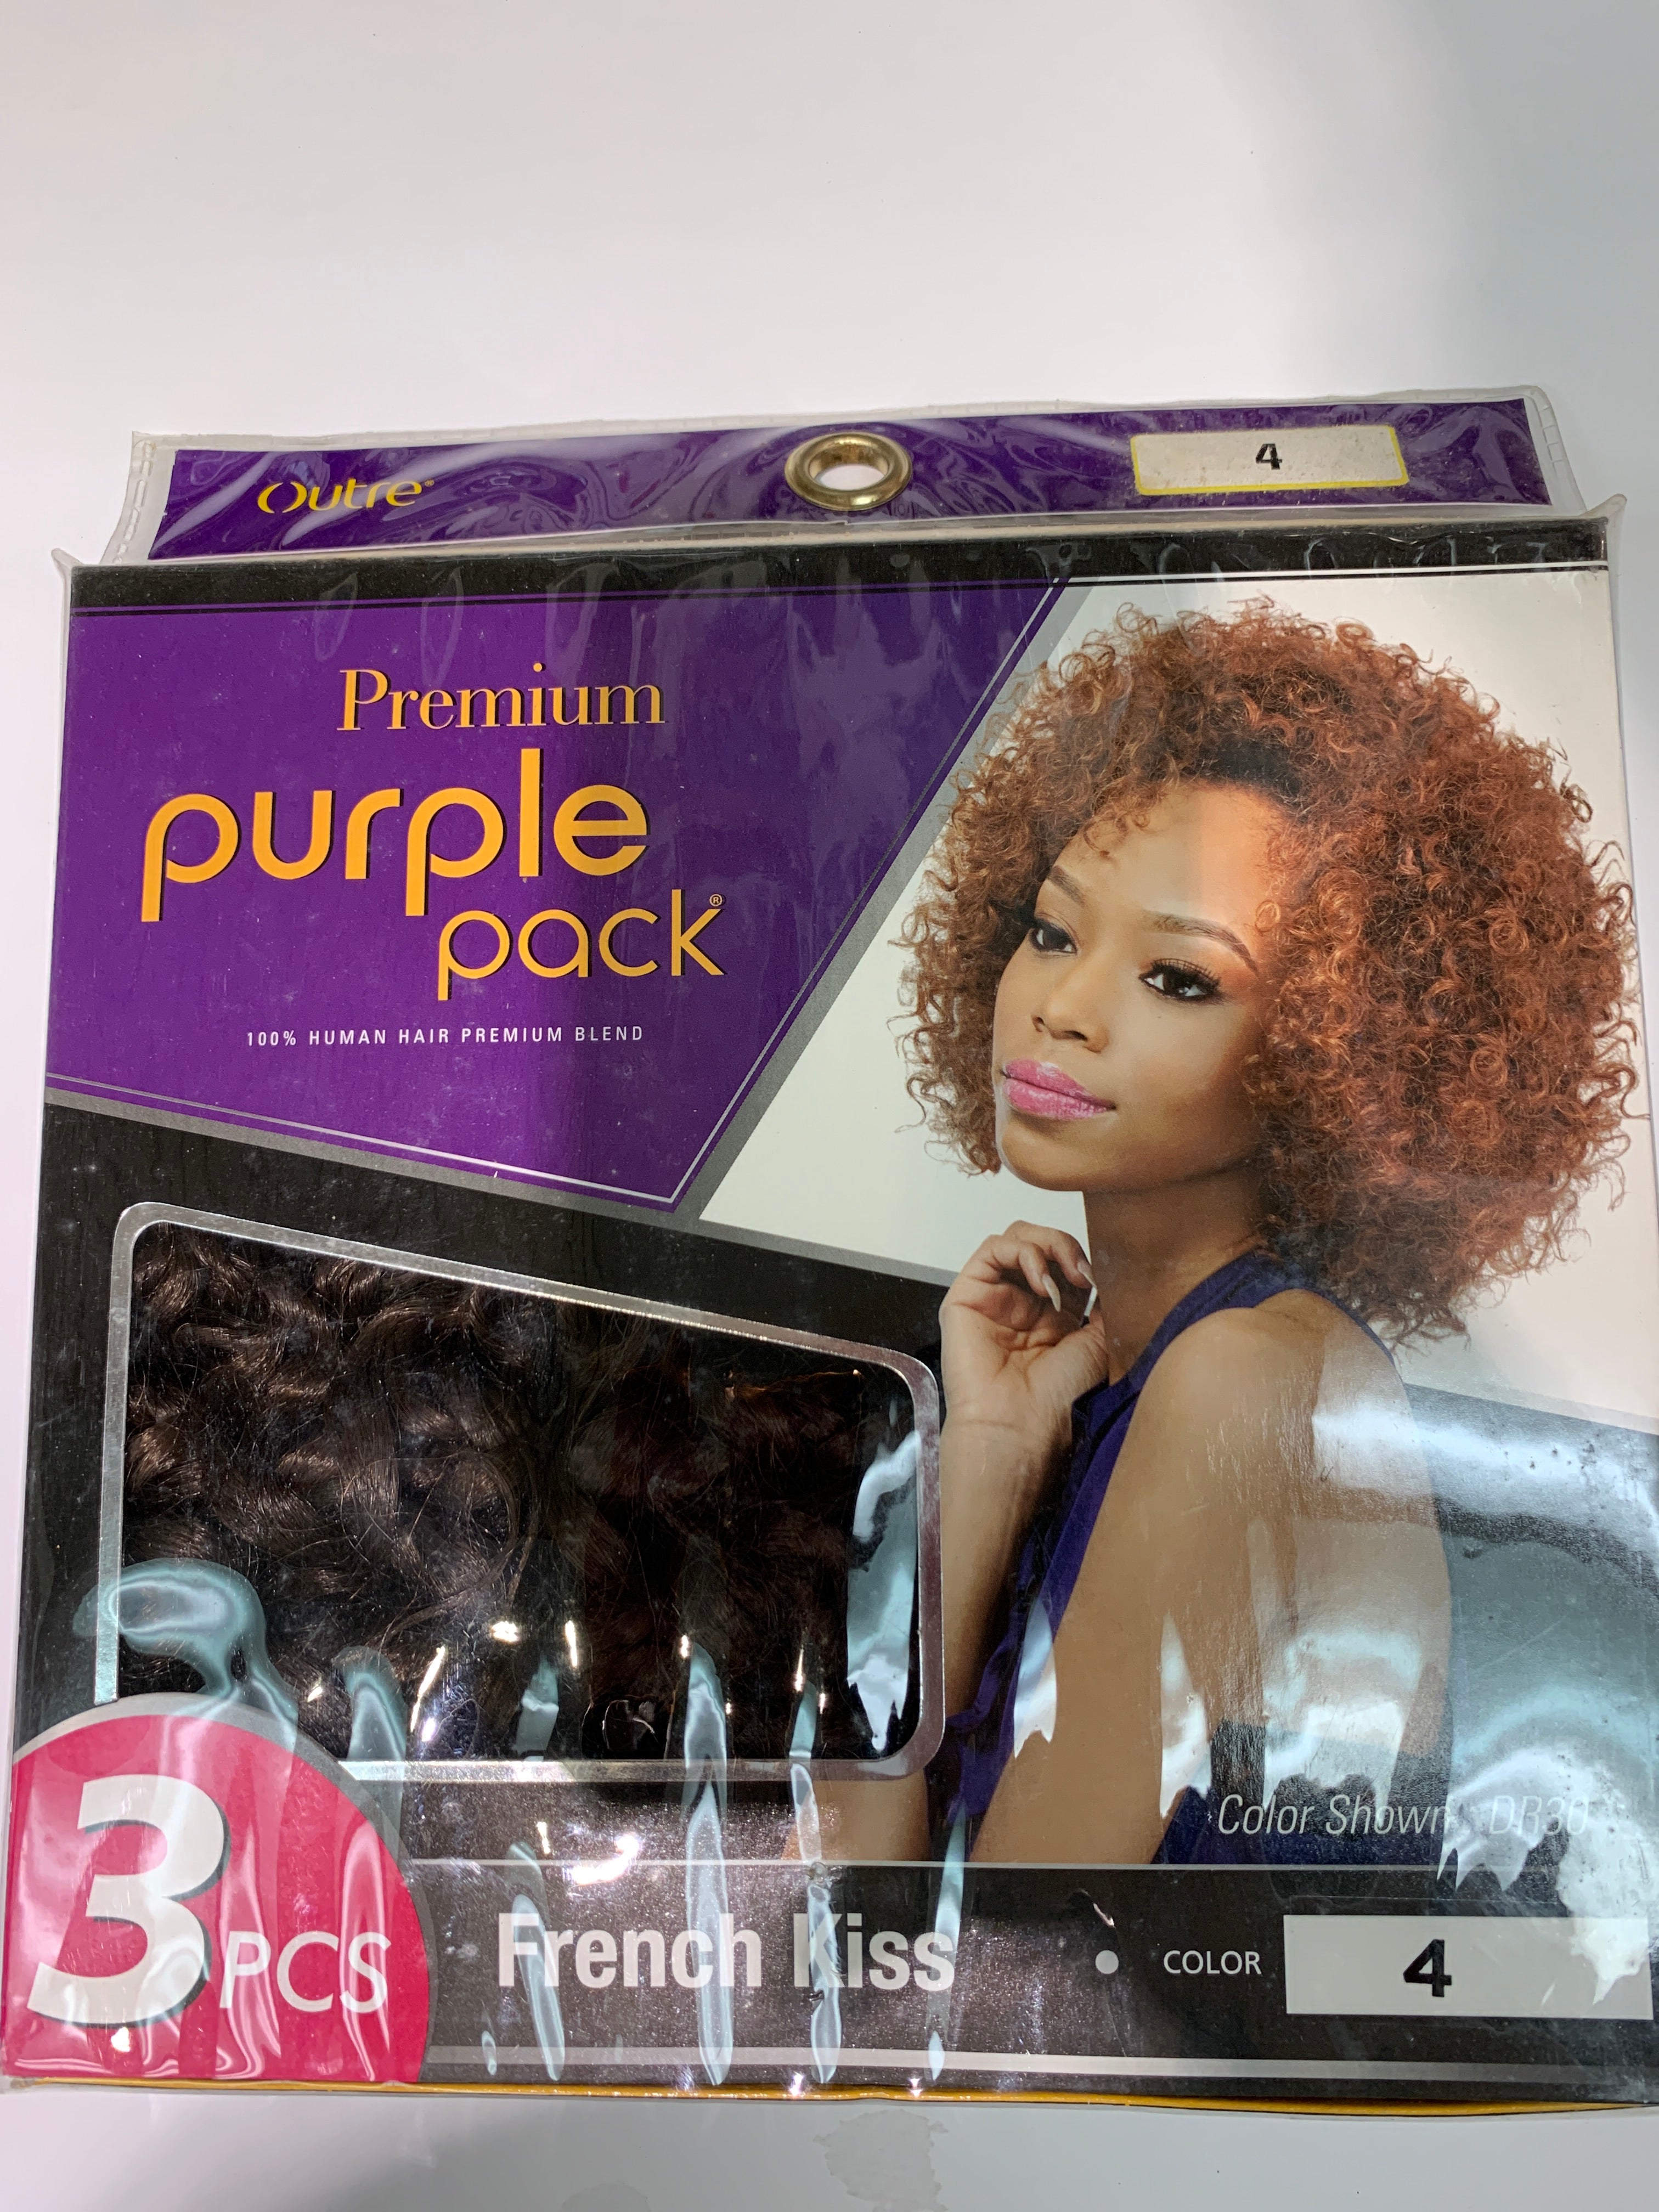 Outre premium purple pack 3pcs French kiss